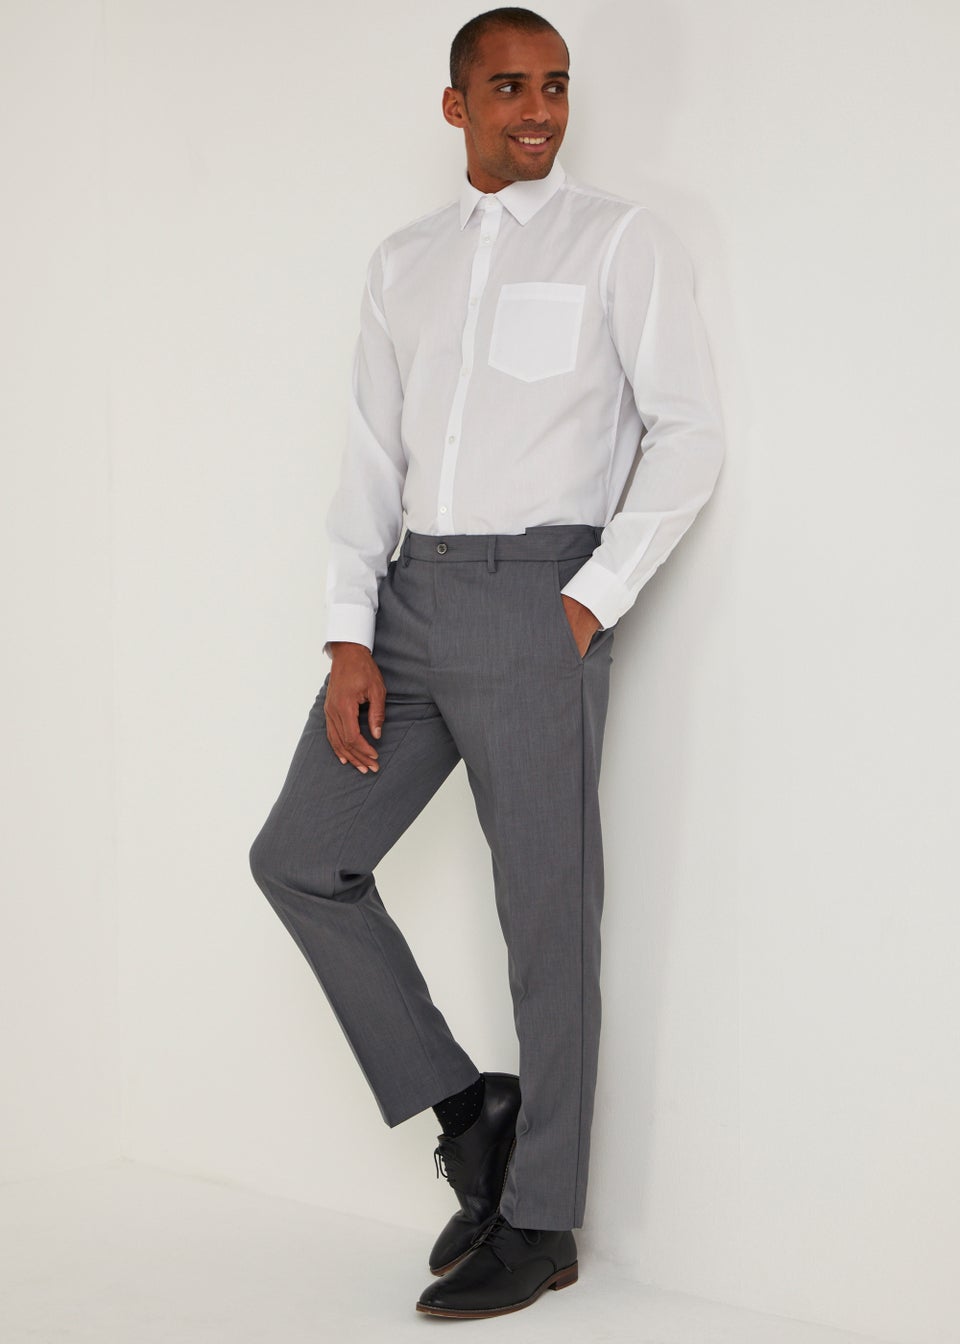 Black Flexi Waist Trouser, Formal Wear at Rs 650/piece in Vasai Virar | ID:  2848978865112